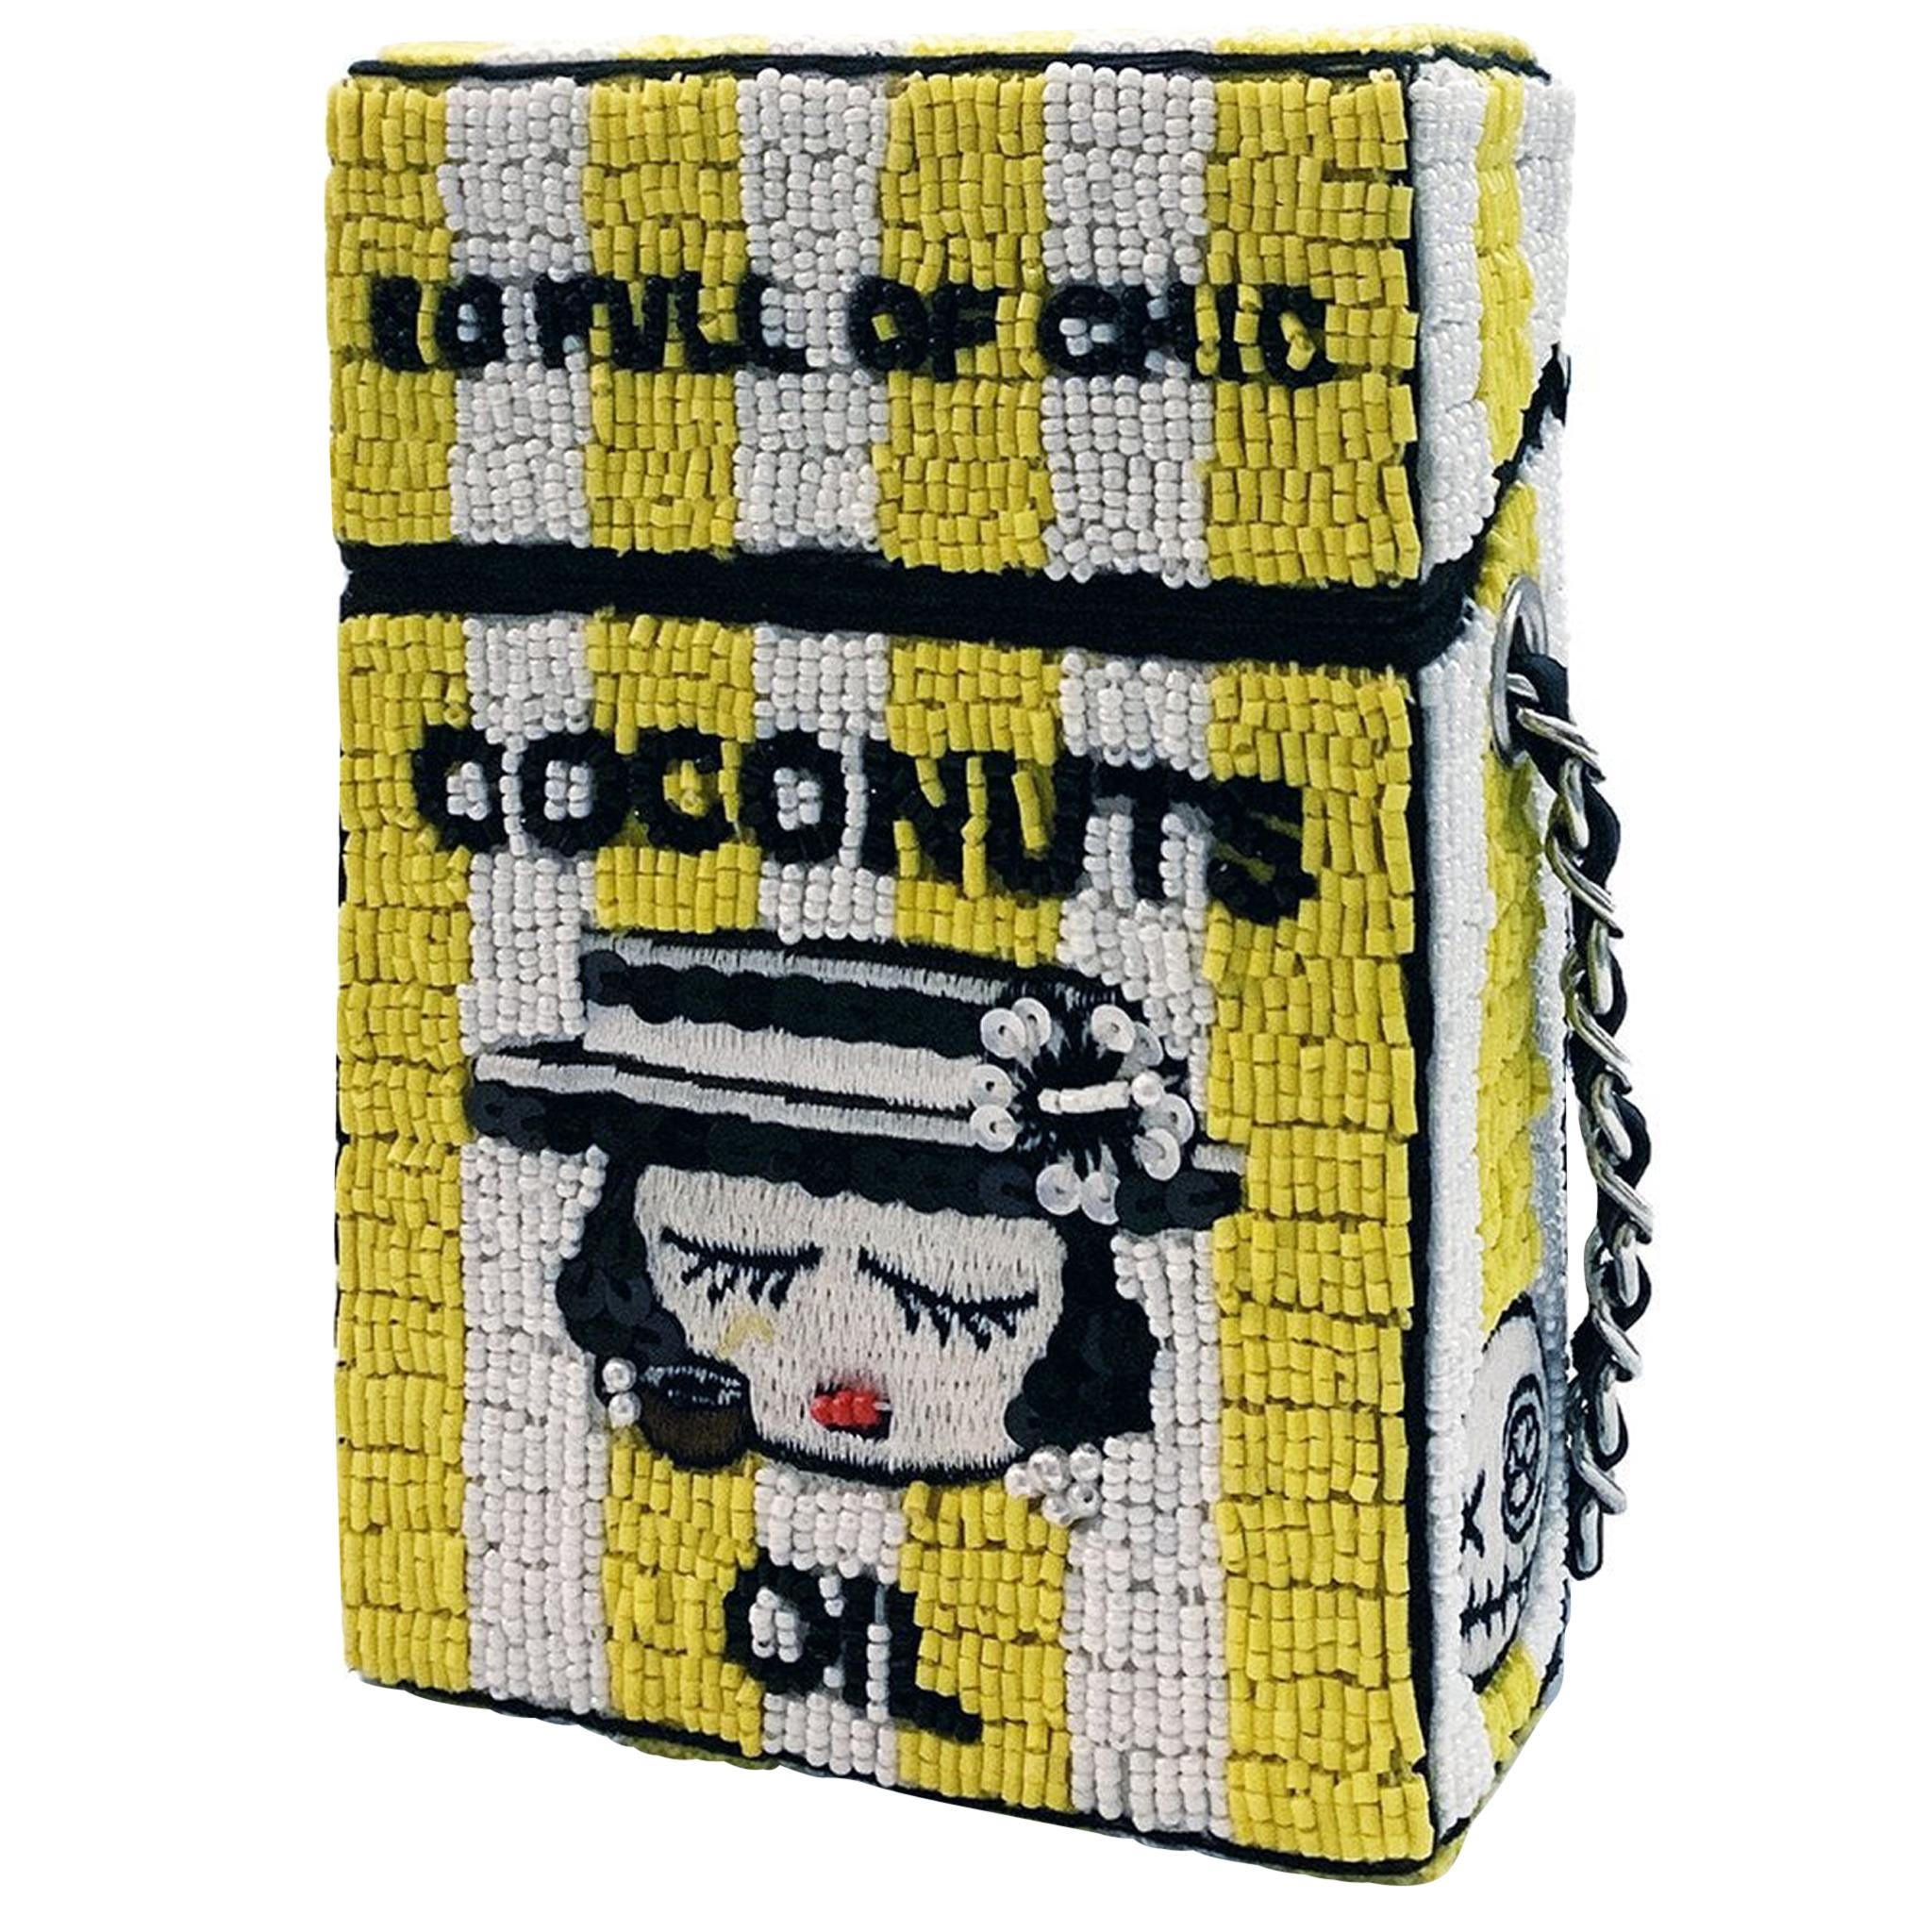 House of Muamua coconuts cigarette bag